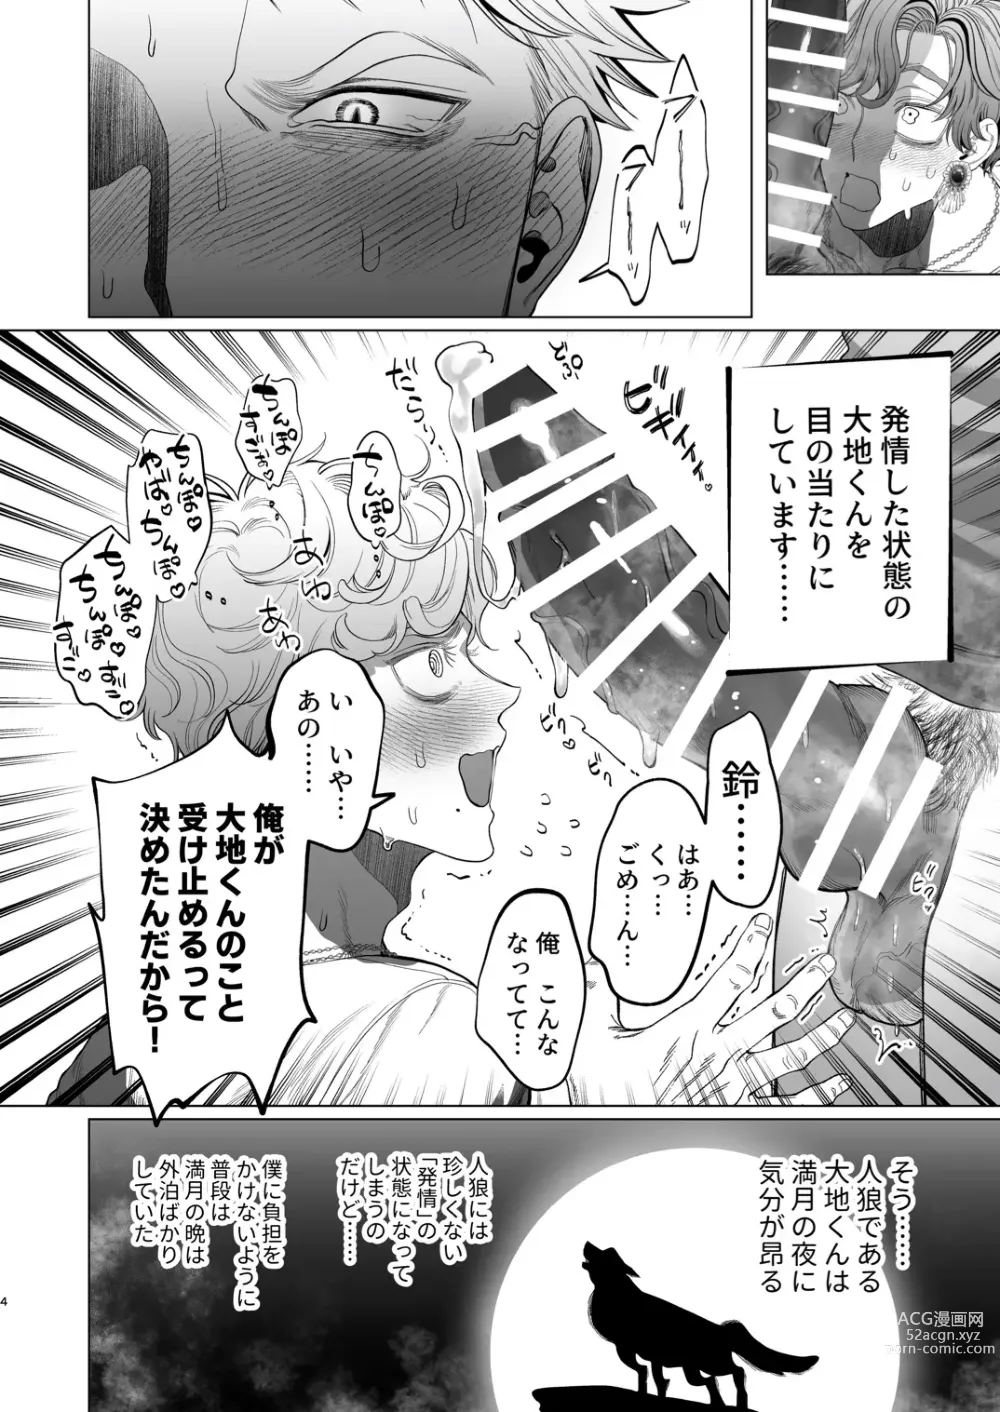 Page 3 of doujinshi Ookami Kareshi no Mofurikata